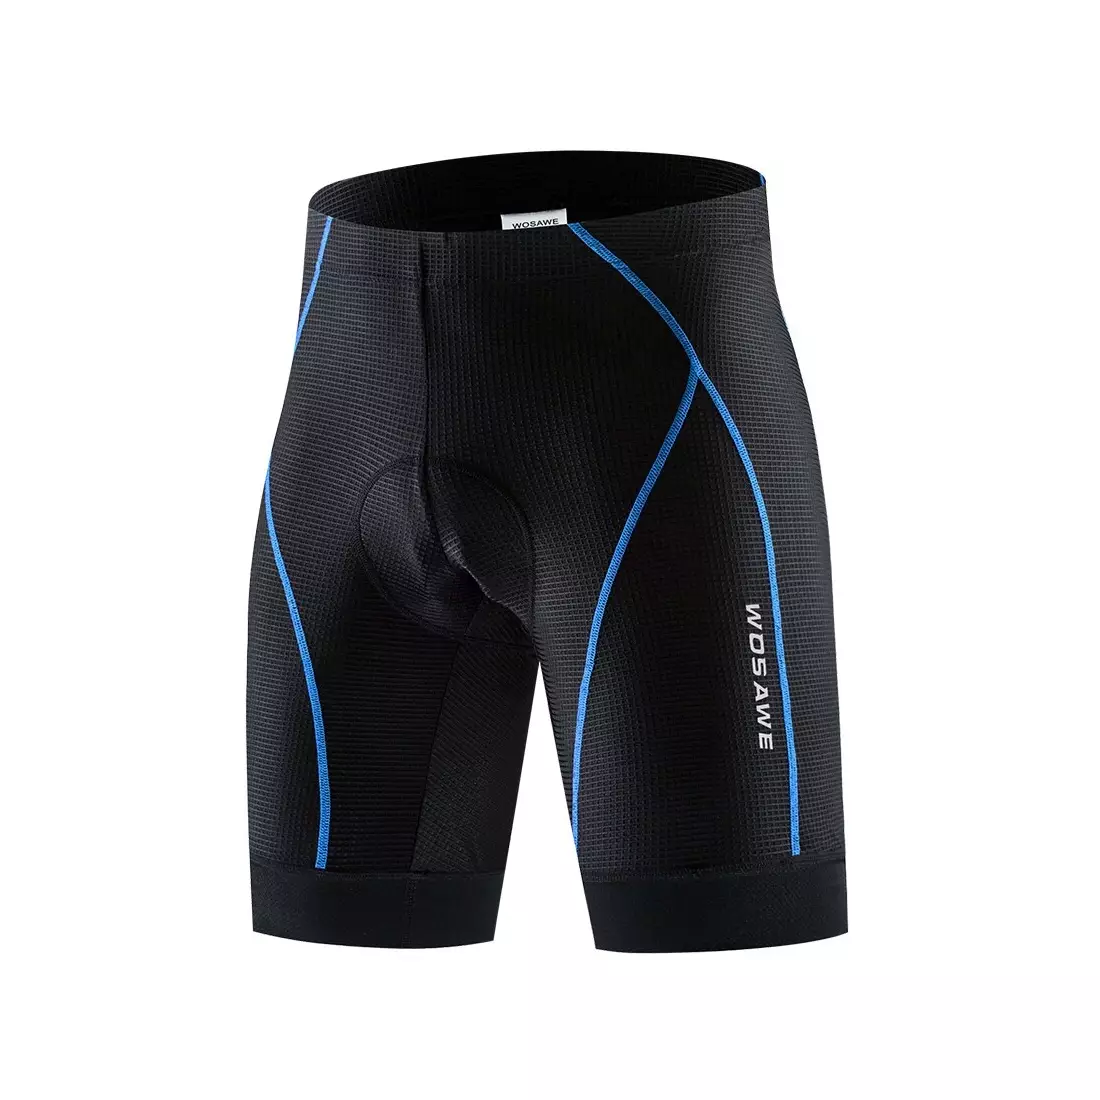 WOSAWE BL111-L men's cycling shorts, no suspenders, gel liner, black/blue